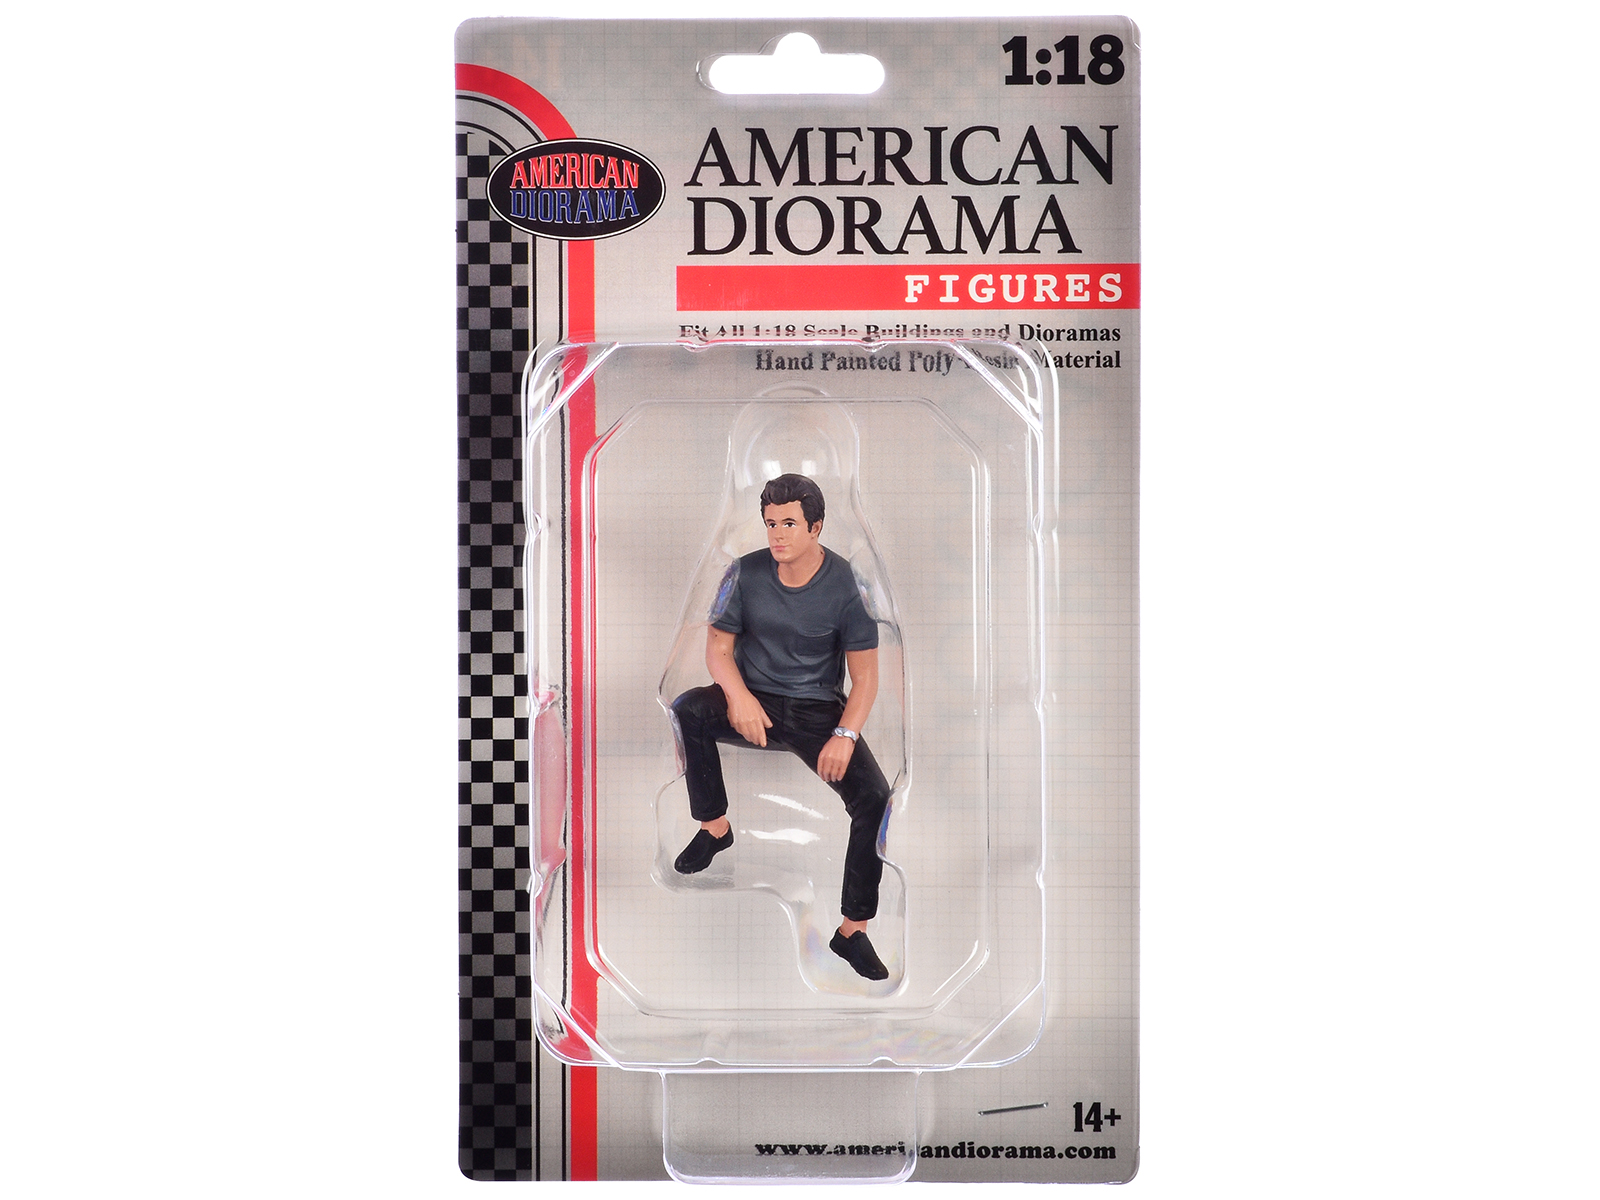 Gentlemen's Club Figure 5 for 1/18 Scale Models by American Diorama -  Southwest Hobbies